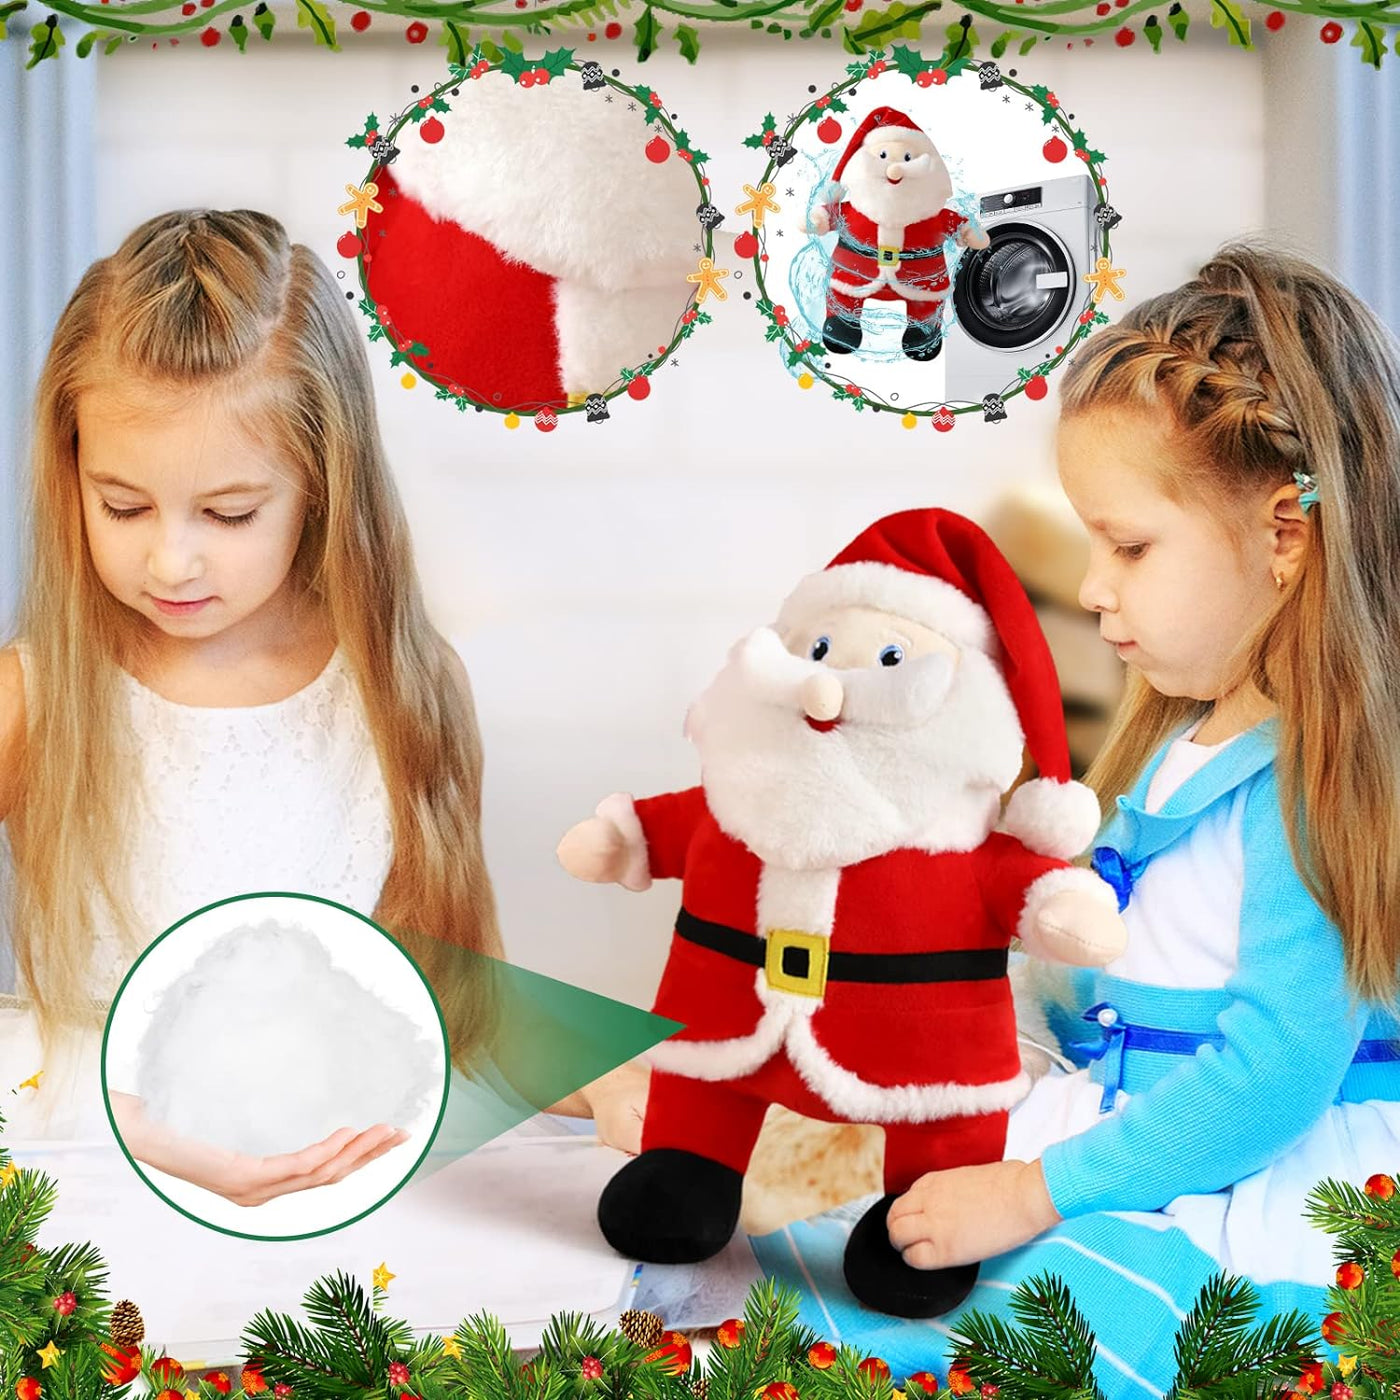 Santa Claus Stuffed Animal Plush Toy -15 Inch Christmas Santa Clause with Santa Hat